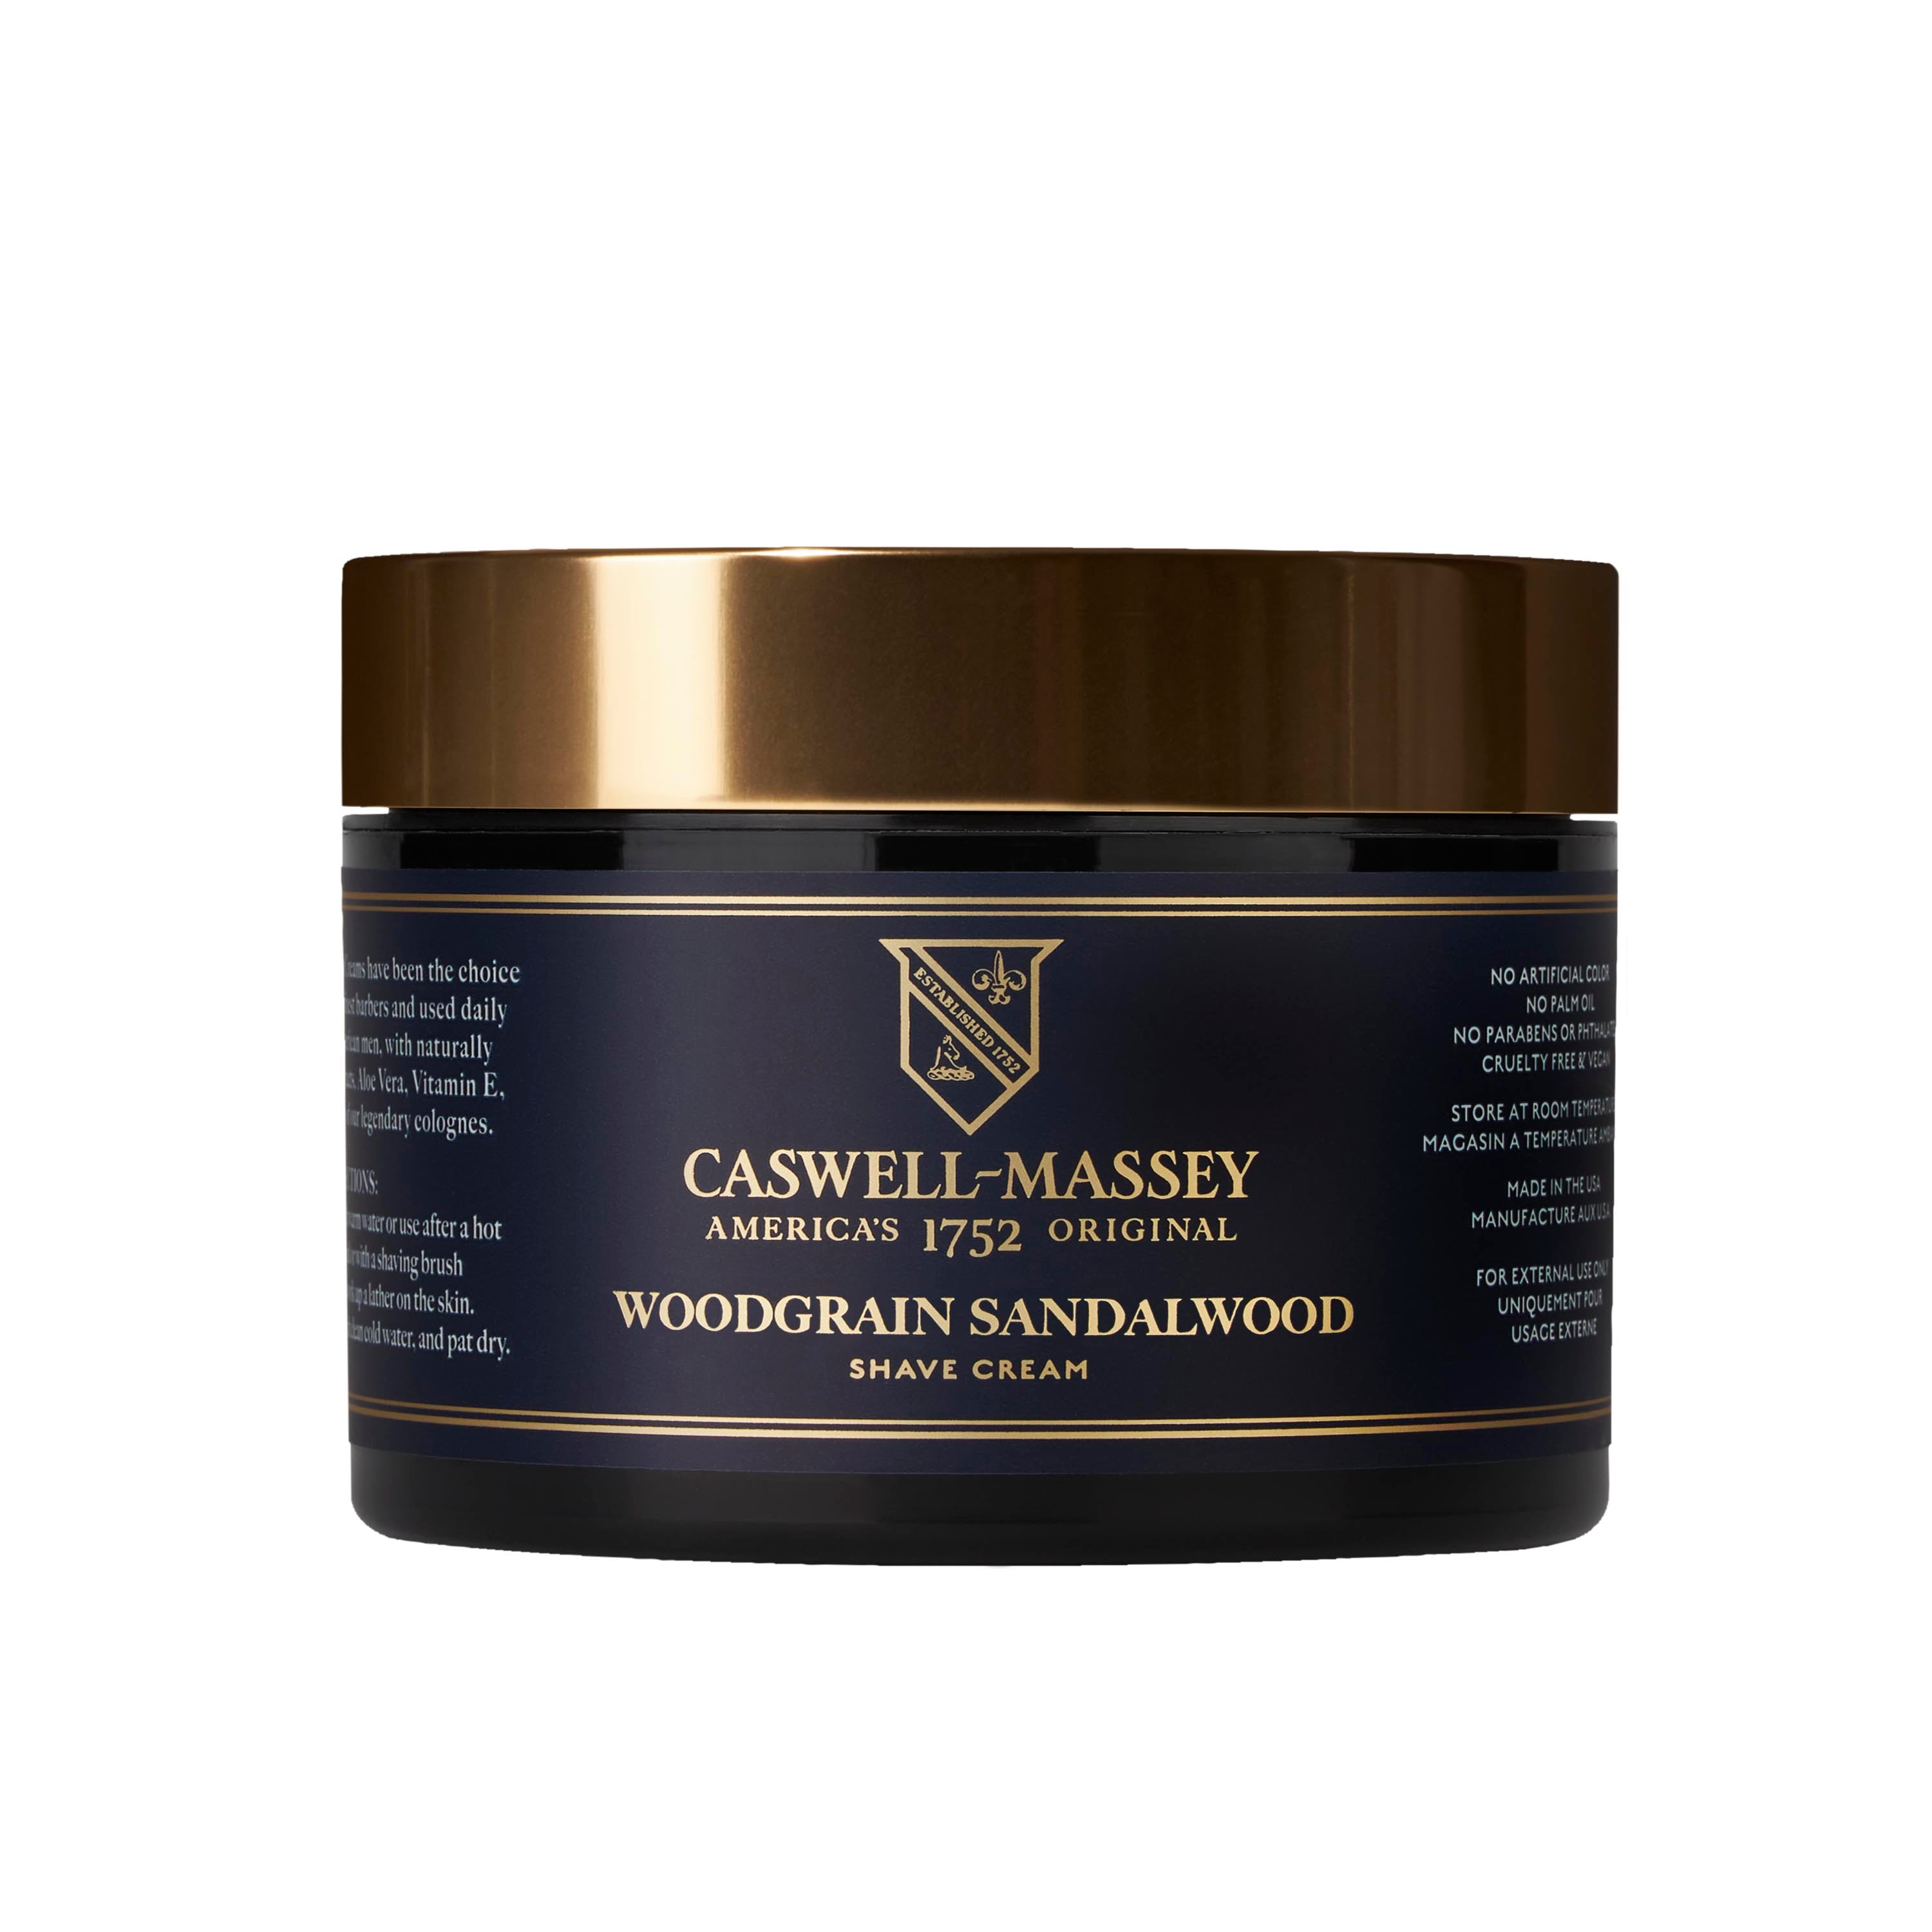 Caswell-Massey® Woodgrain Sandalwood Shave Cream, 8oz in jar